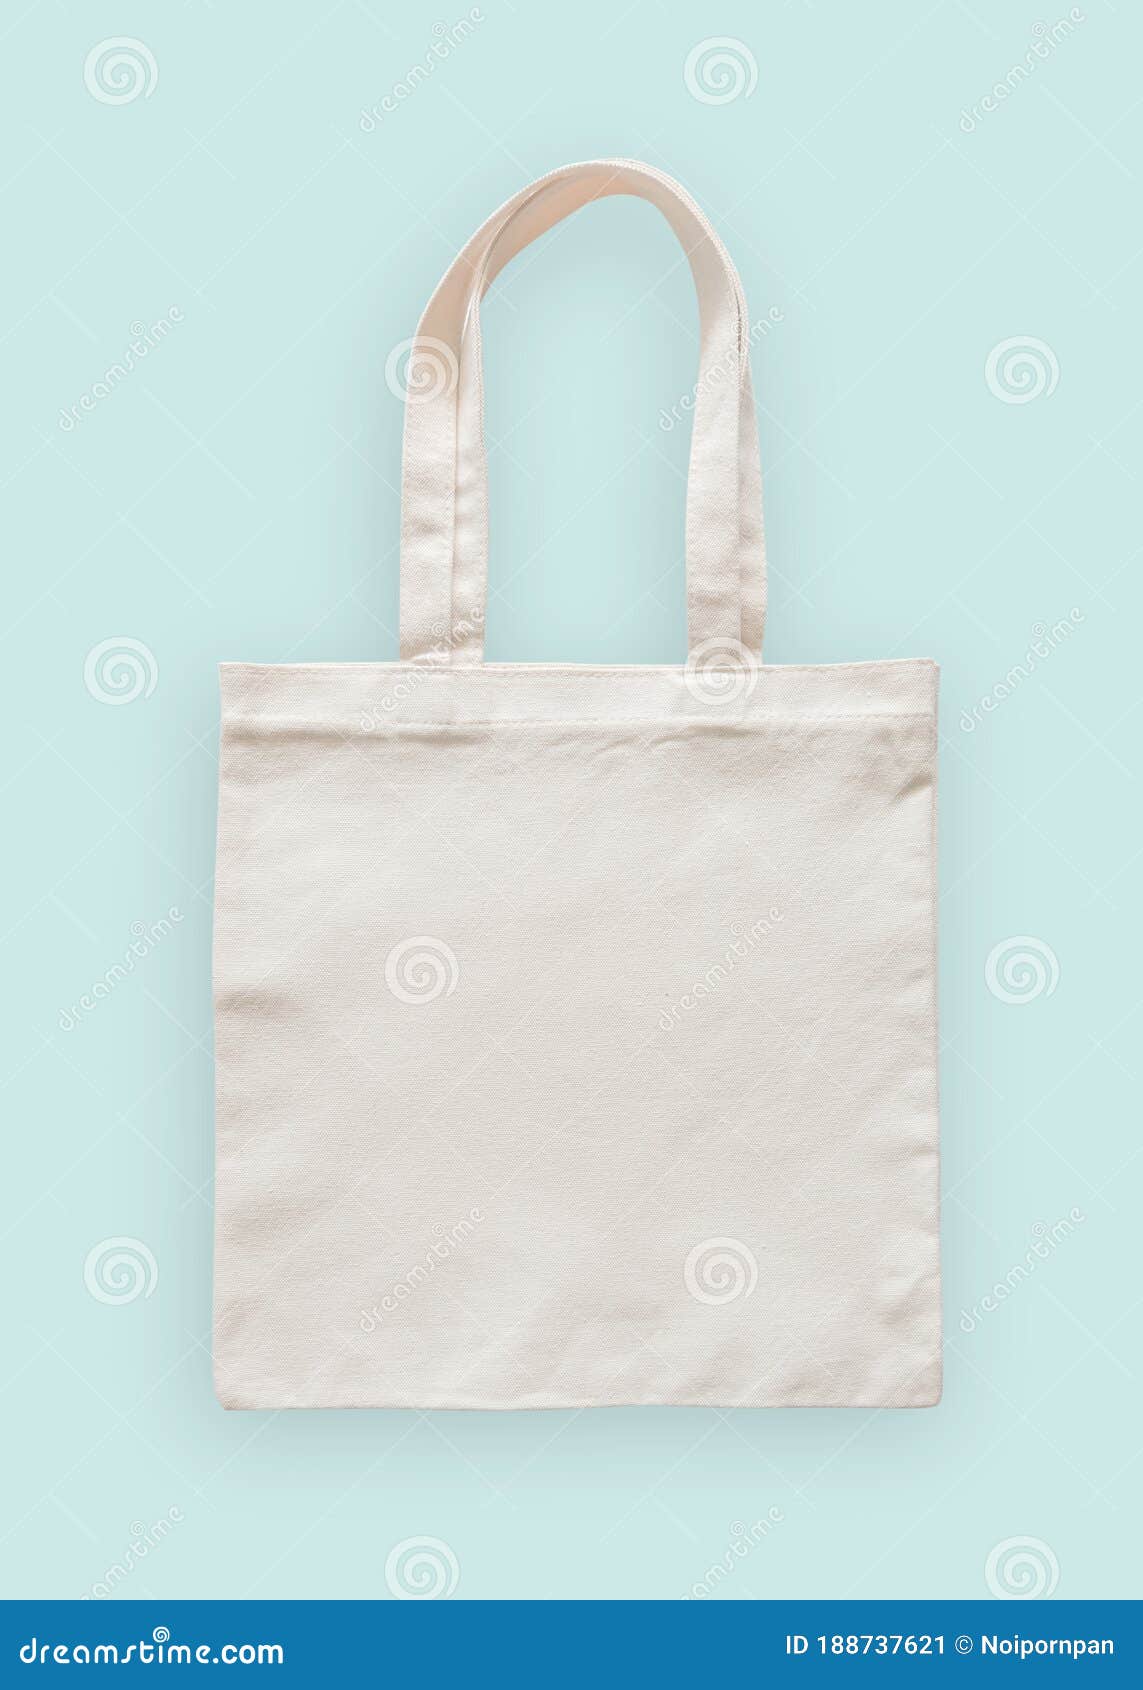 Tote Bag Canvas Fabric Cloth Eco Shopping Sack Mockup Blank Template ...